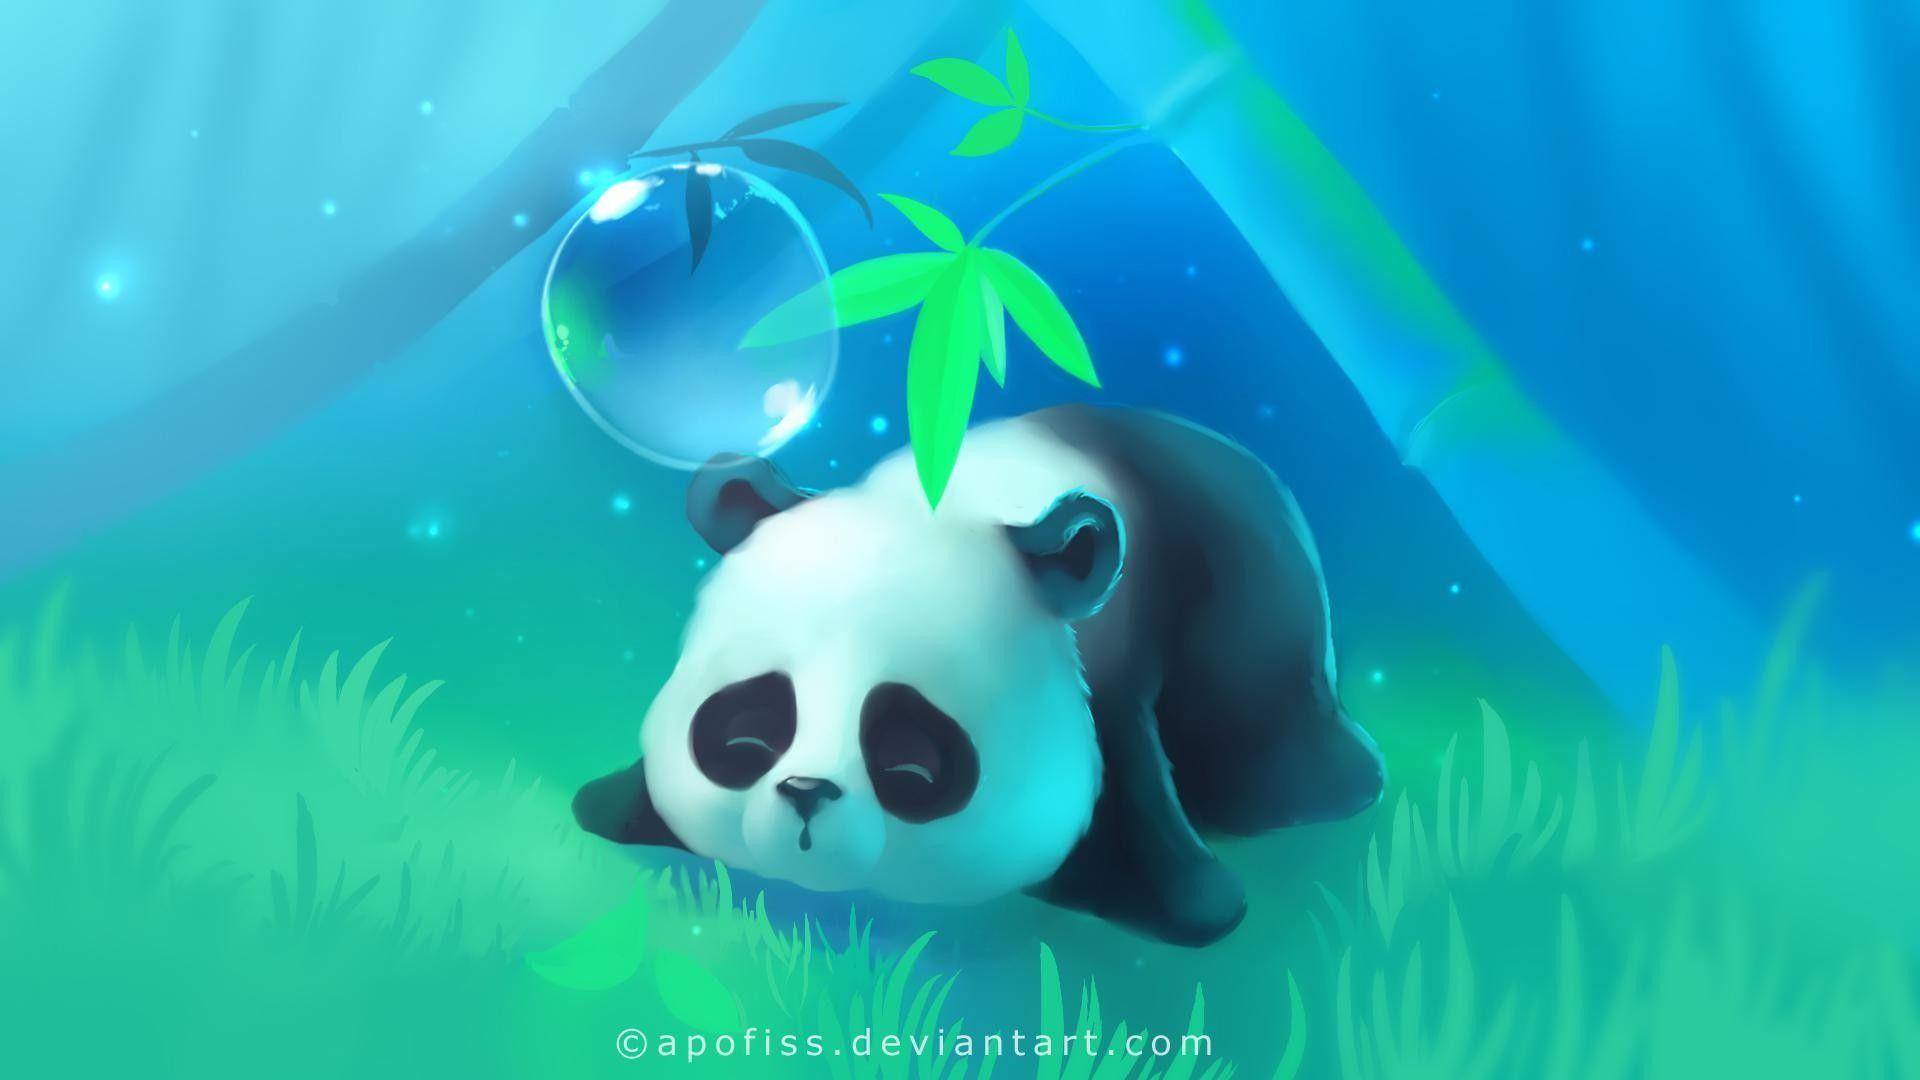 Cute Wallpaper Baby Panda - Free Transparent PNG Clipart Images Download